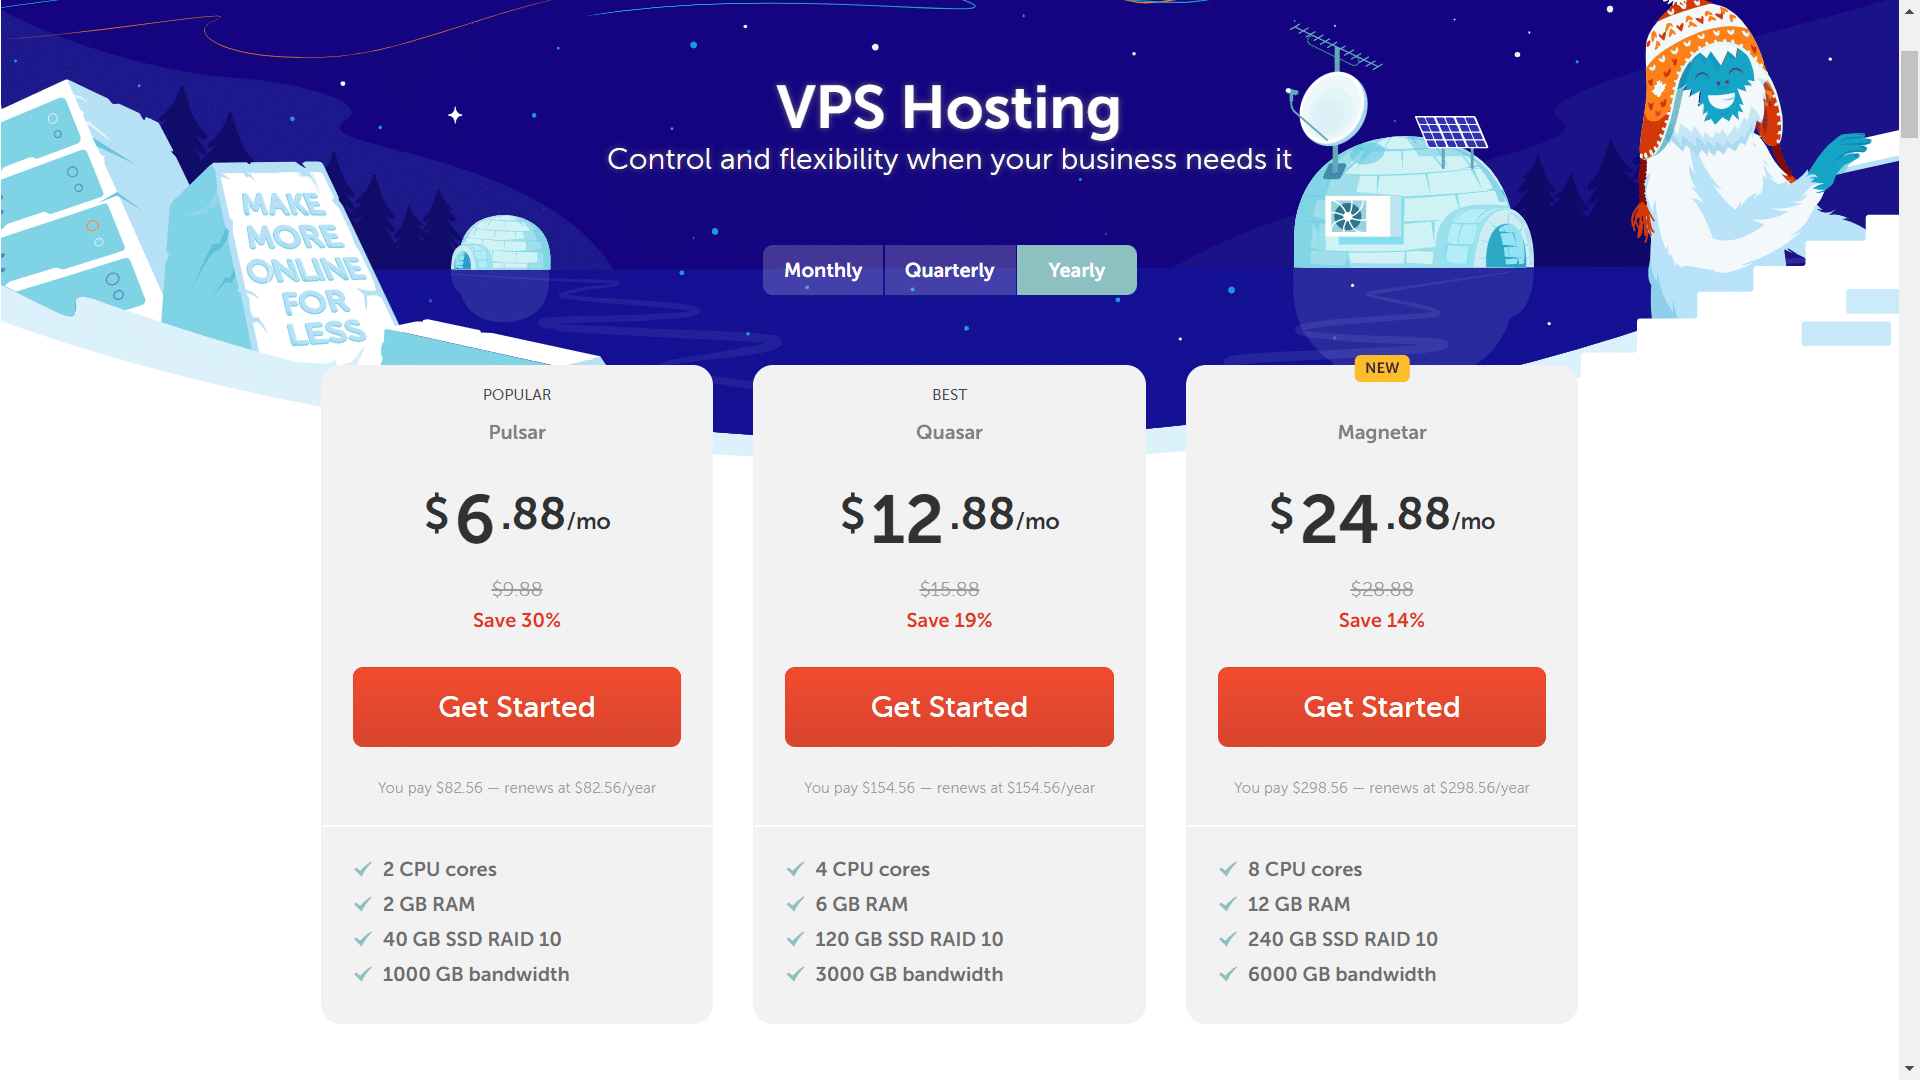 accuweb vs namecheap - namecheap vps hosting pricing